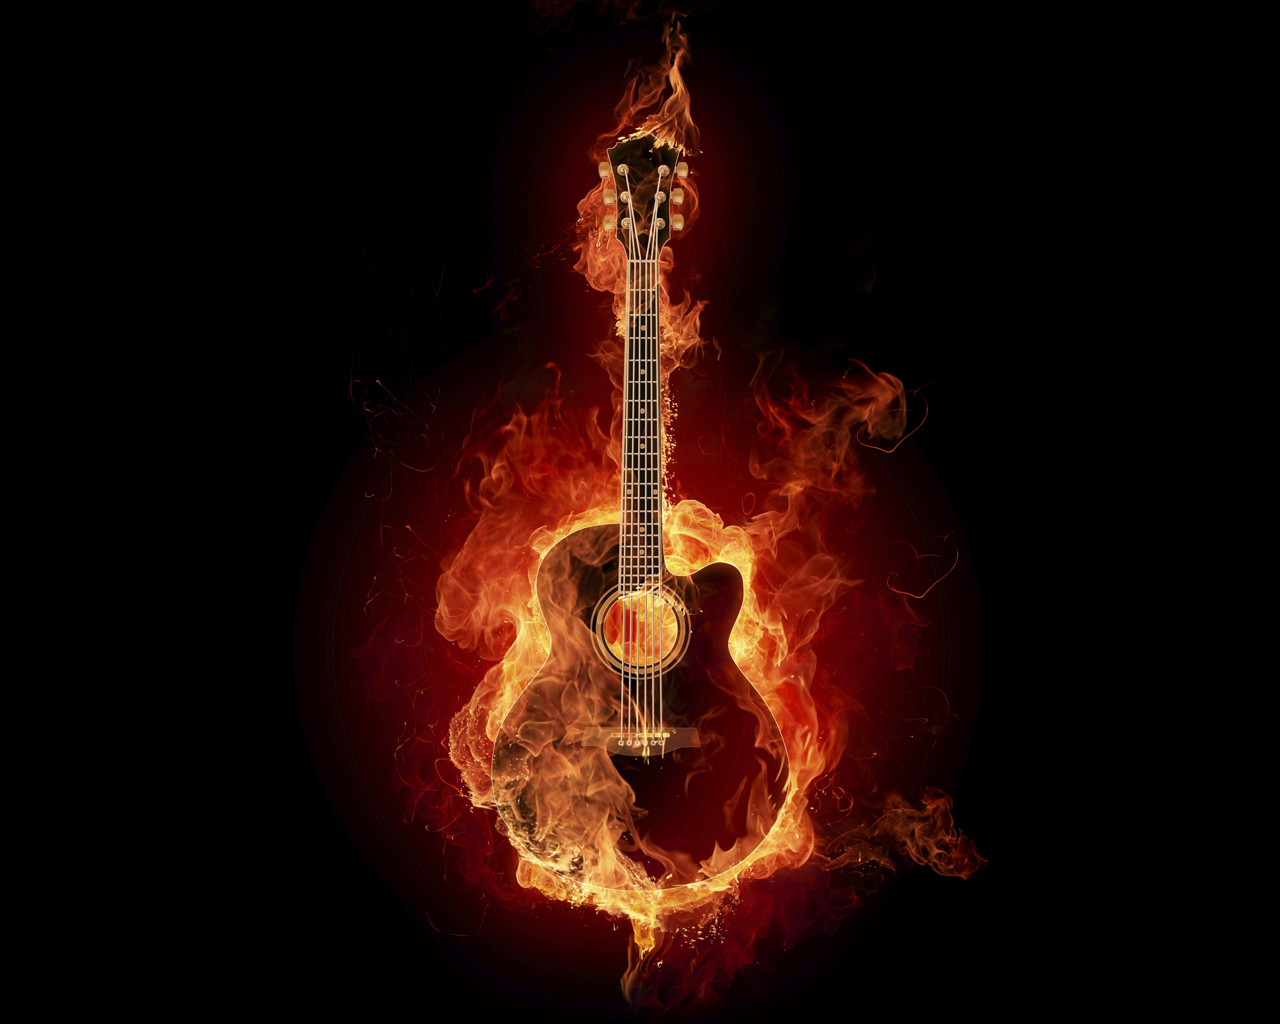 Previous, Creative Wallpaper - Guitar is on fire wallpaper